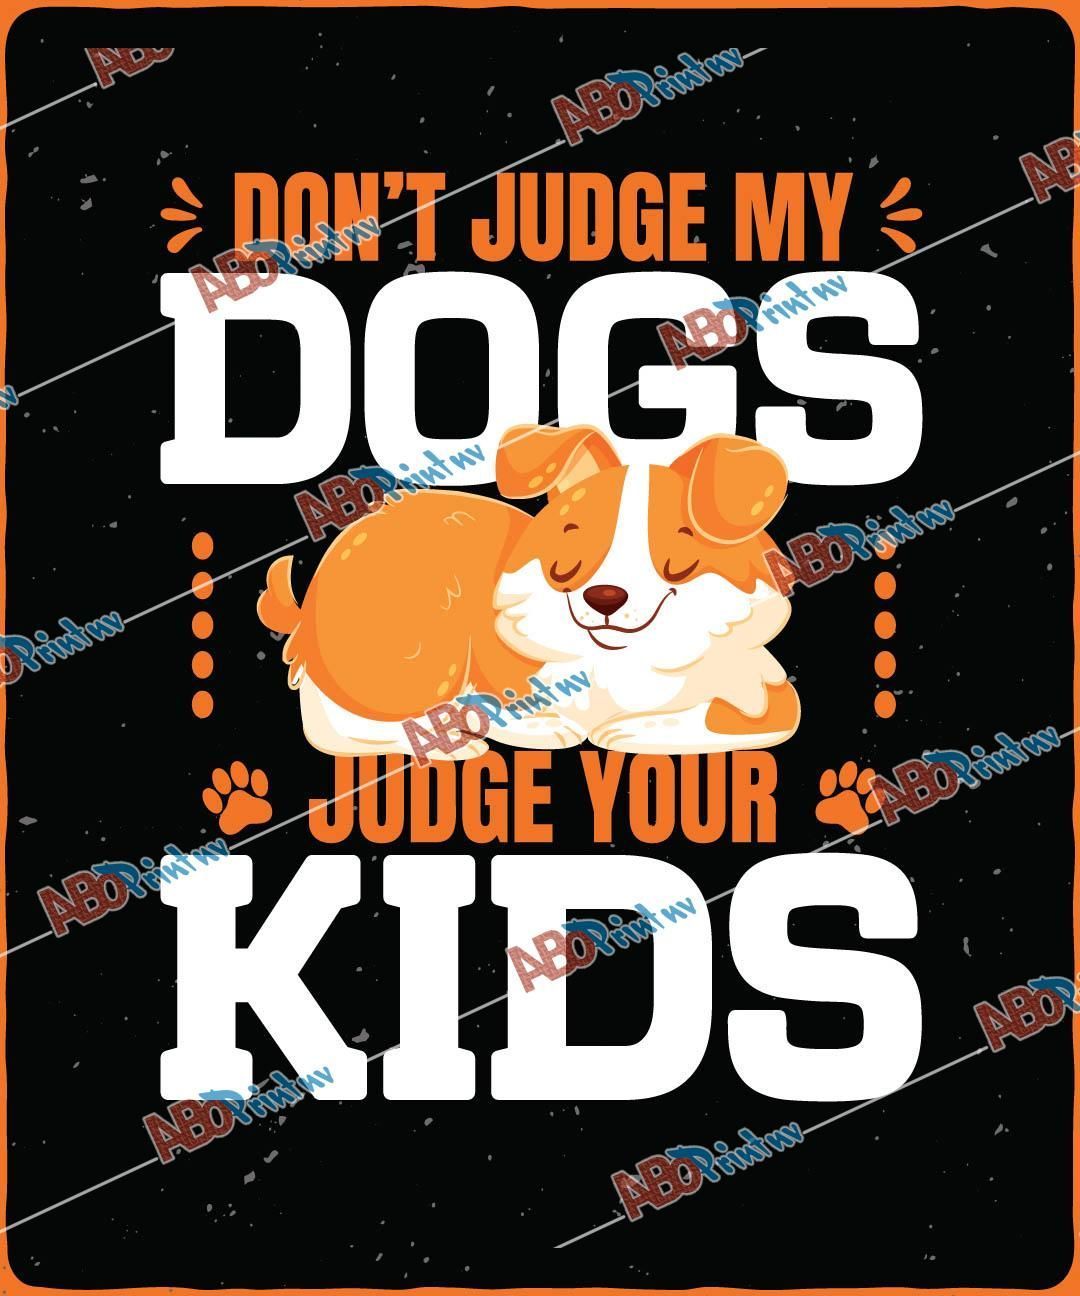 Don't Judge My Dogs, Judge your KidsJPG (1).jpg